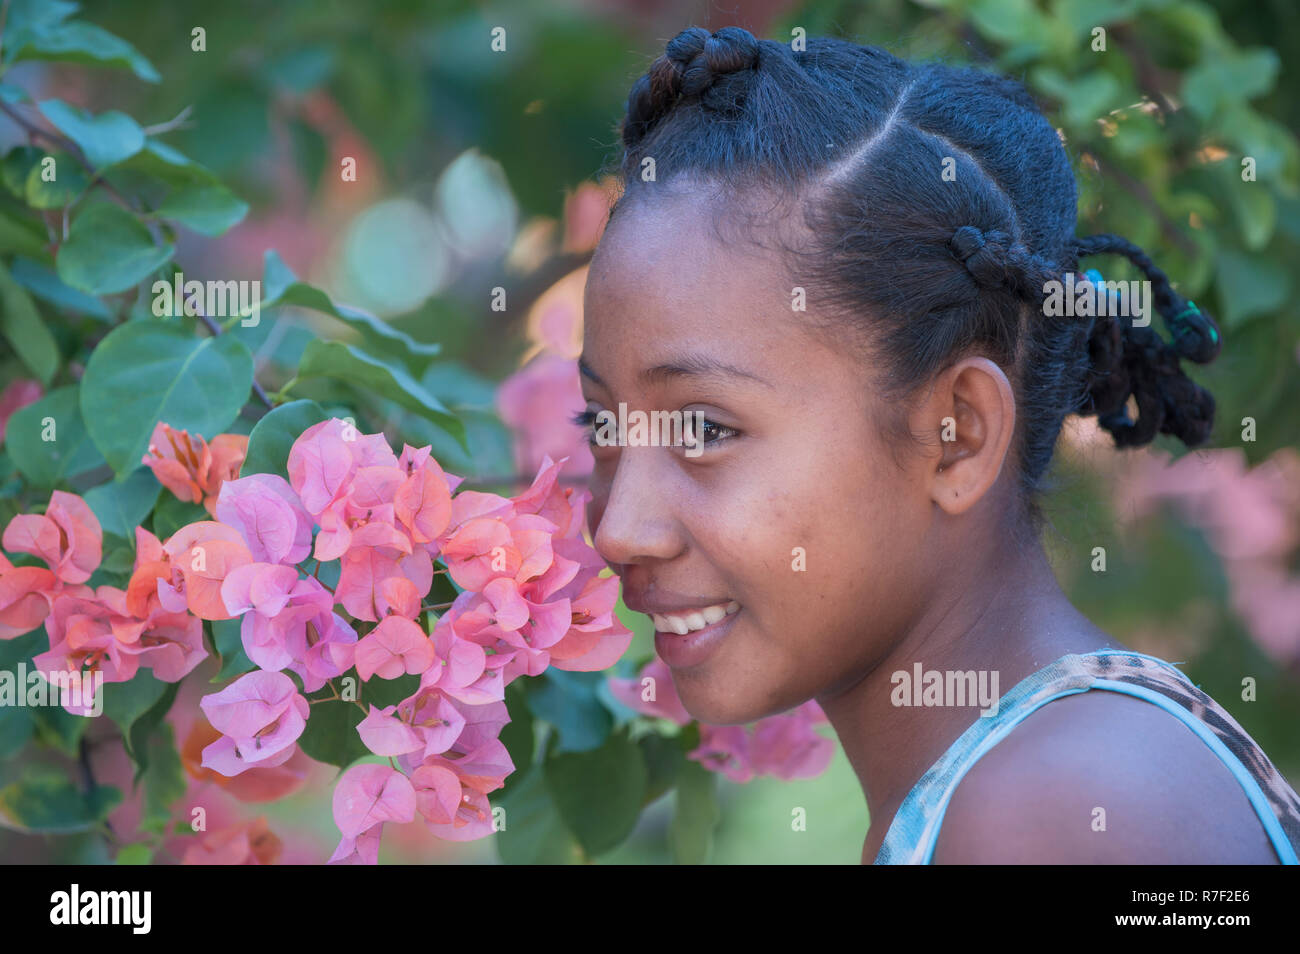 Malagasy girl, 15-16 years, Morondava, Toliara province, Madagascar Stock Photo